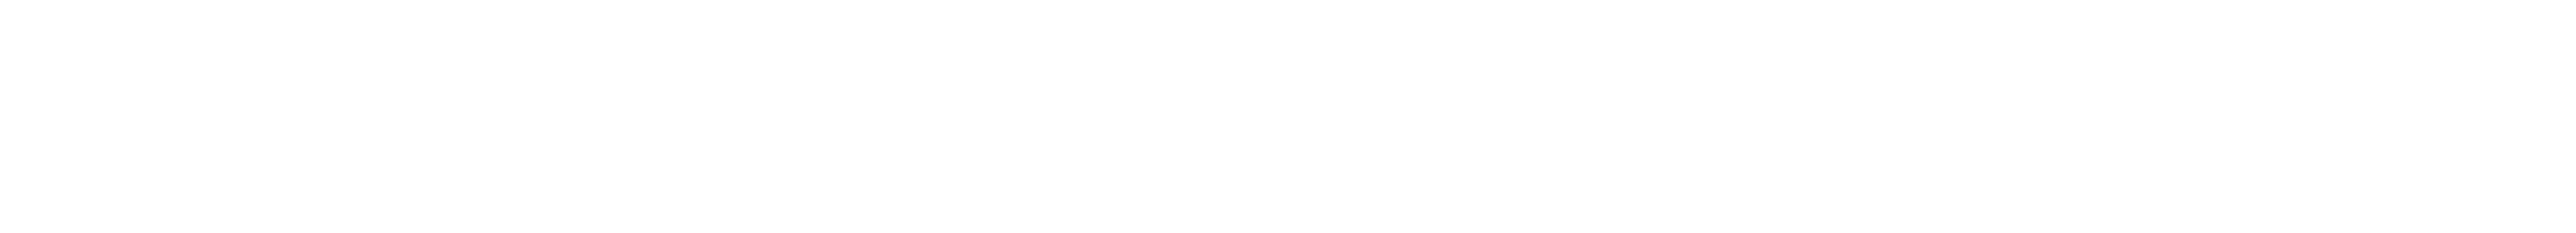 Techsign DOC beyaz logo